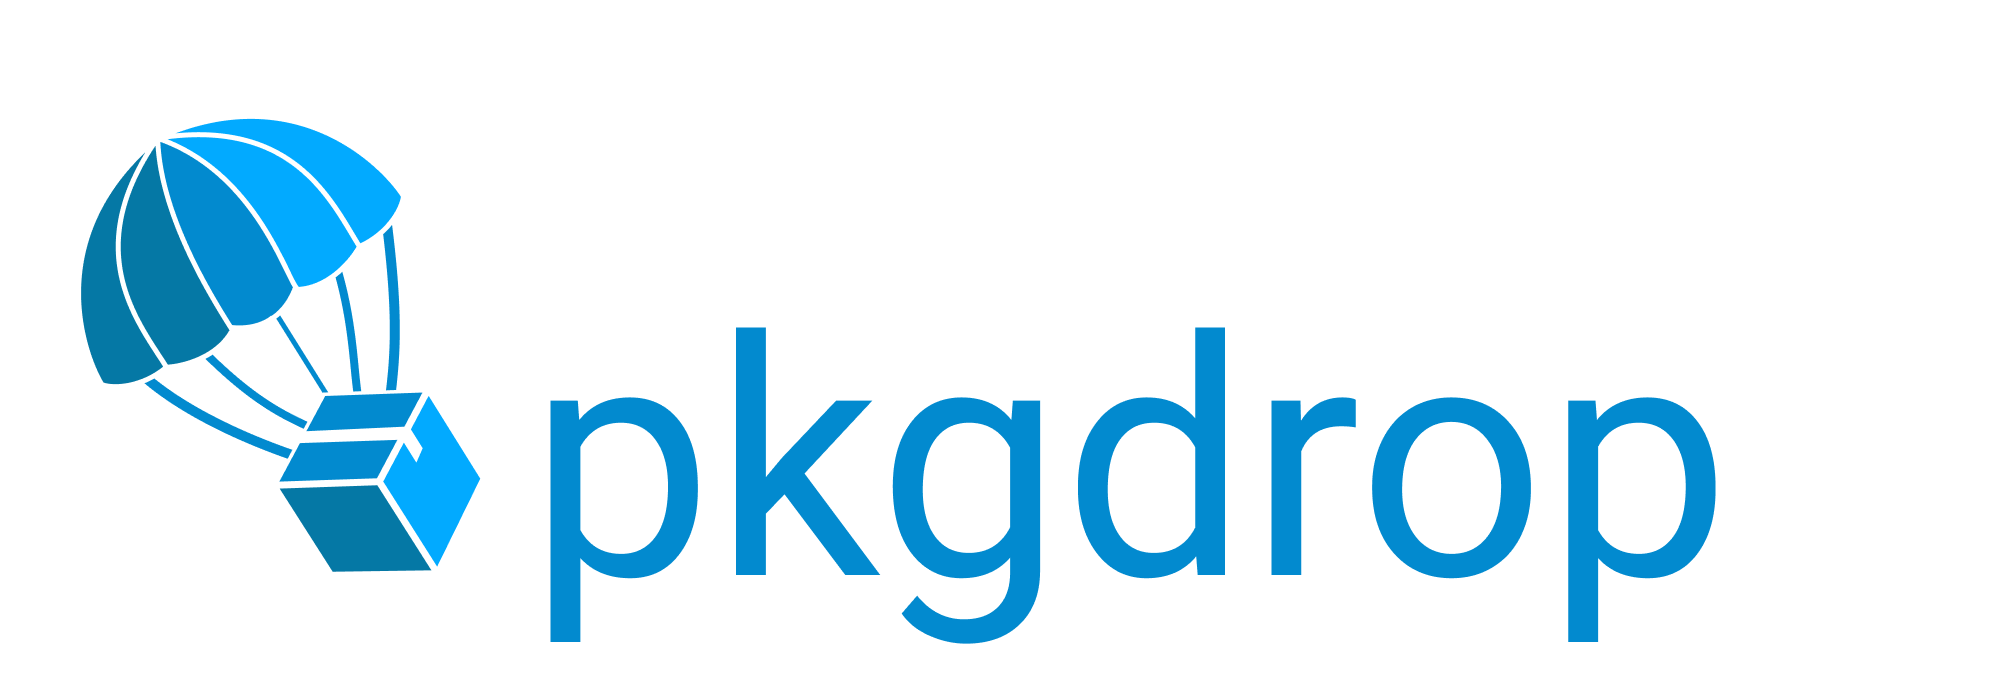 pkgdrop Logo